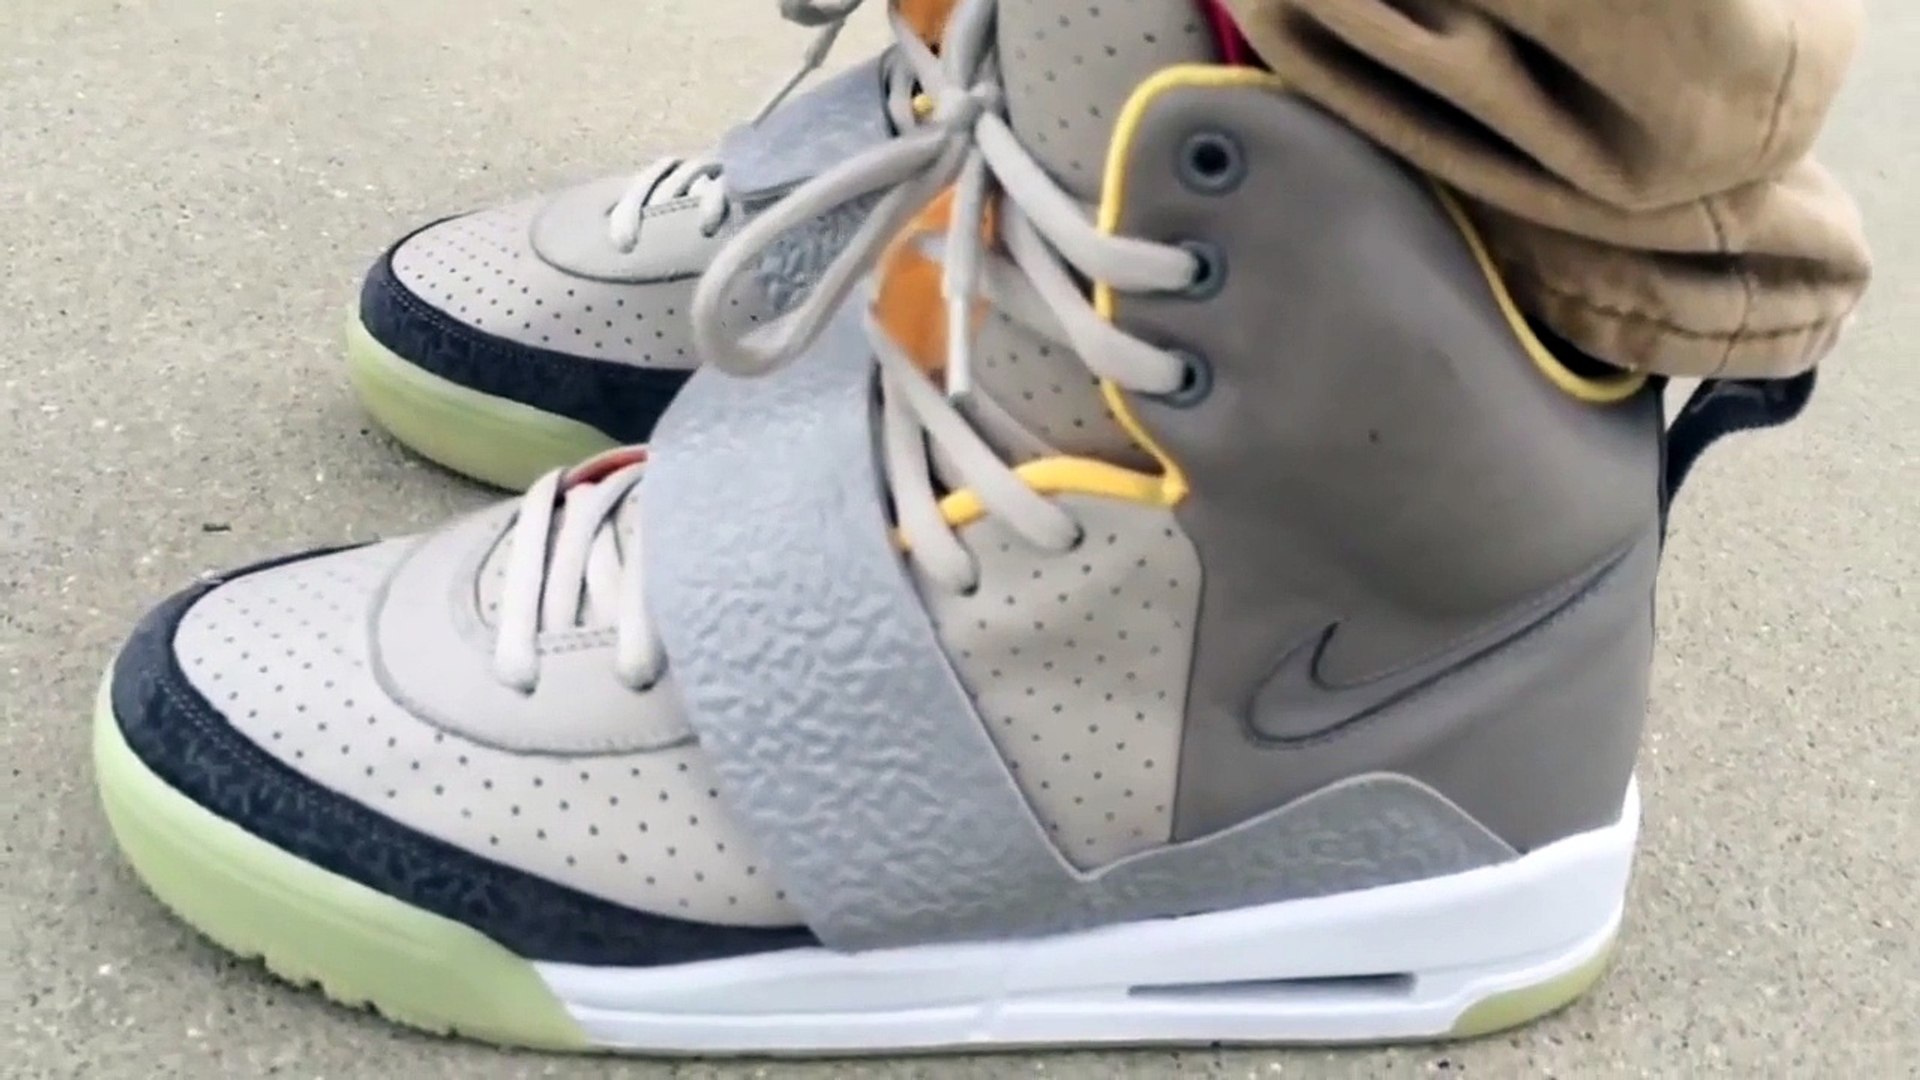 Nike Yeezy 1 Zen Grey on Feet - video Dailymotion